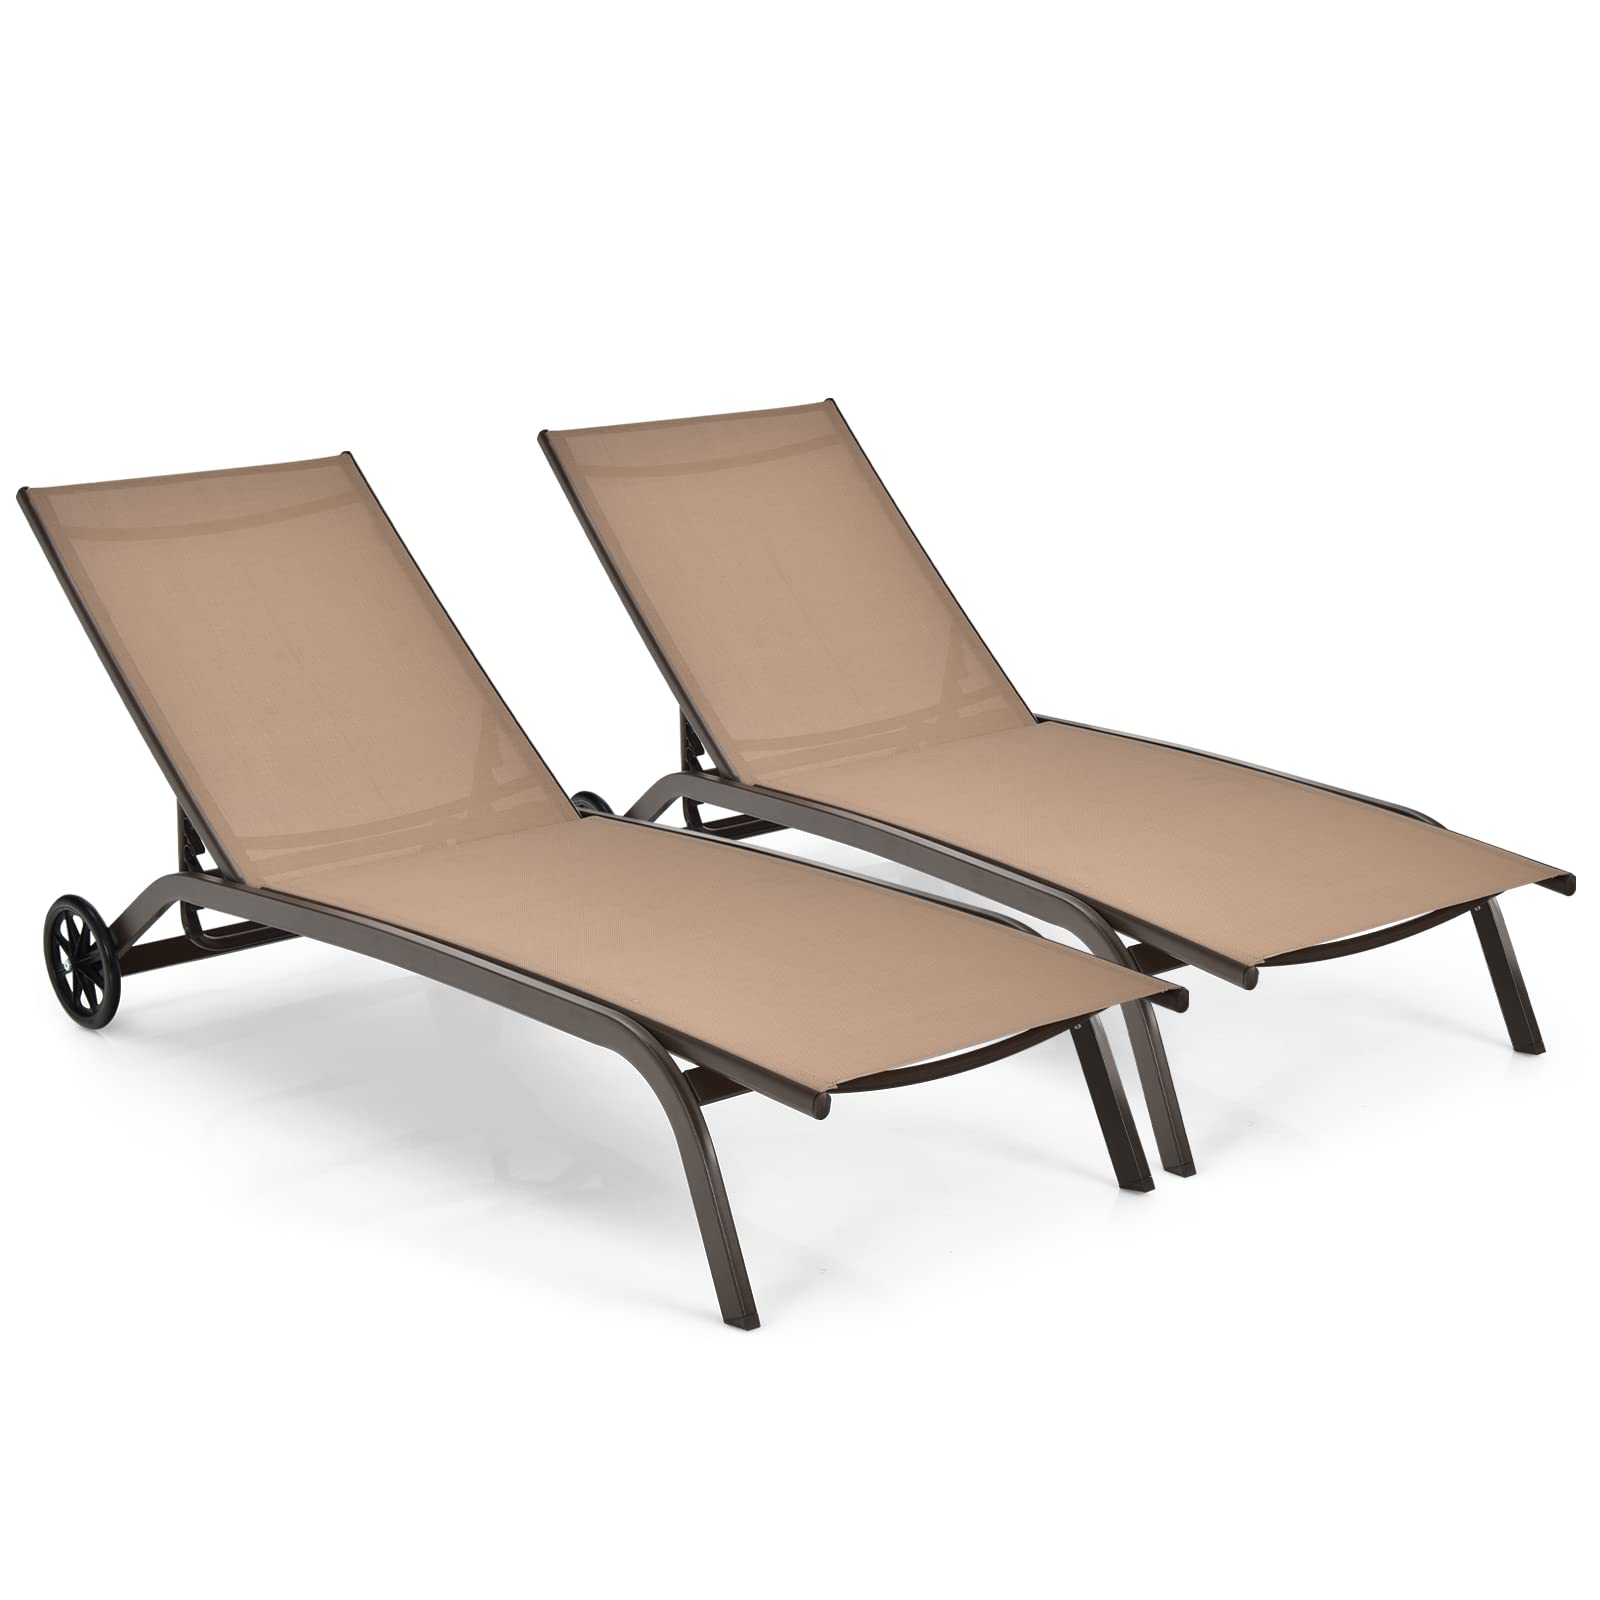 Giantex Patio Lounge Chairs for Pool Area